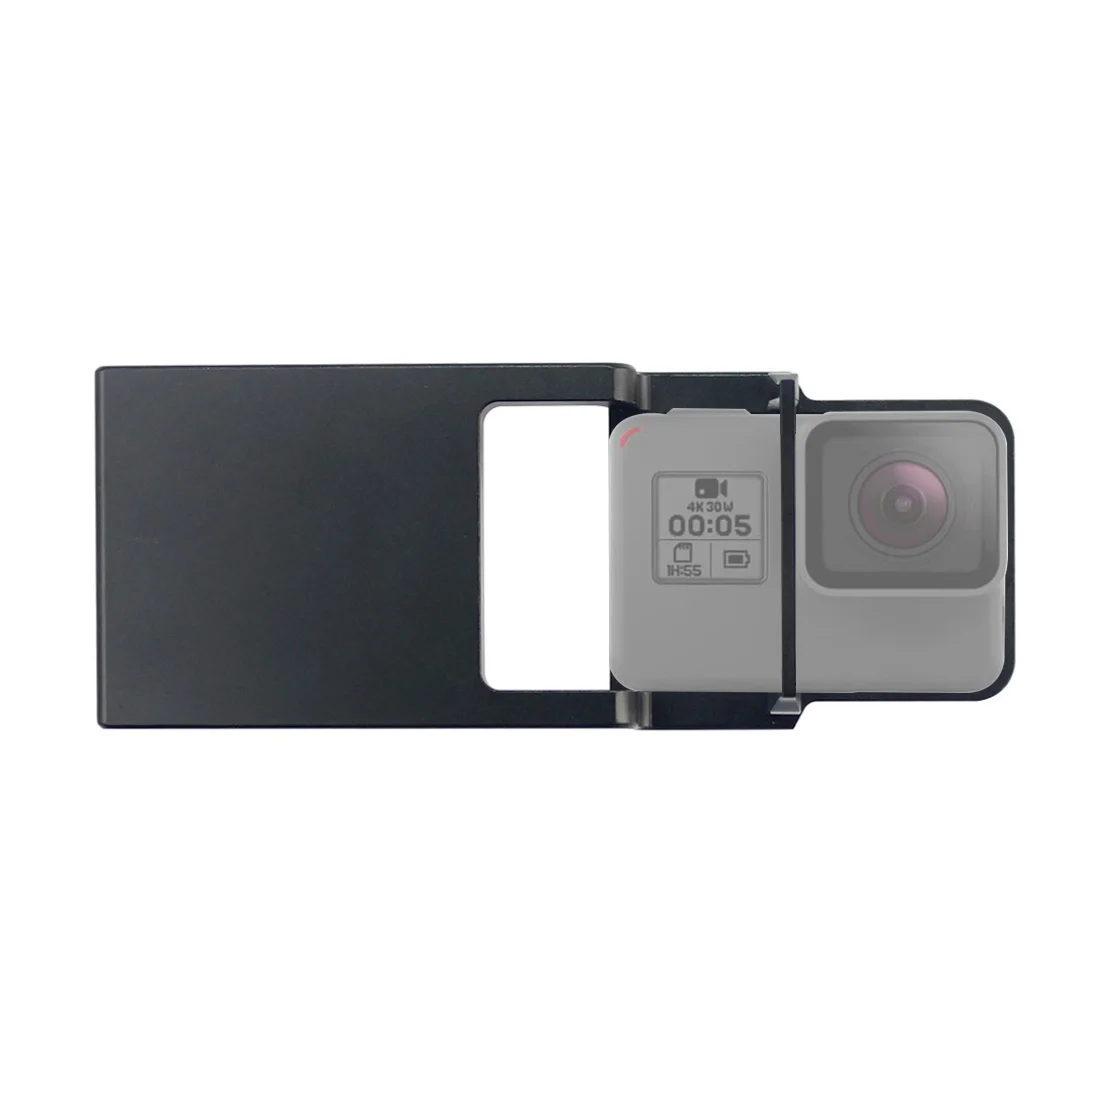 Алюминиевый адаптер для крепления переключателя FEICHAO для GoPro Hero 7 6 /5 4 3+ / Session для DJI OSMO Mobile/Zhiyun /Feiyu Gimbal Stabilizer 0